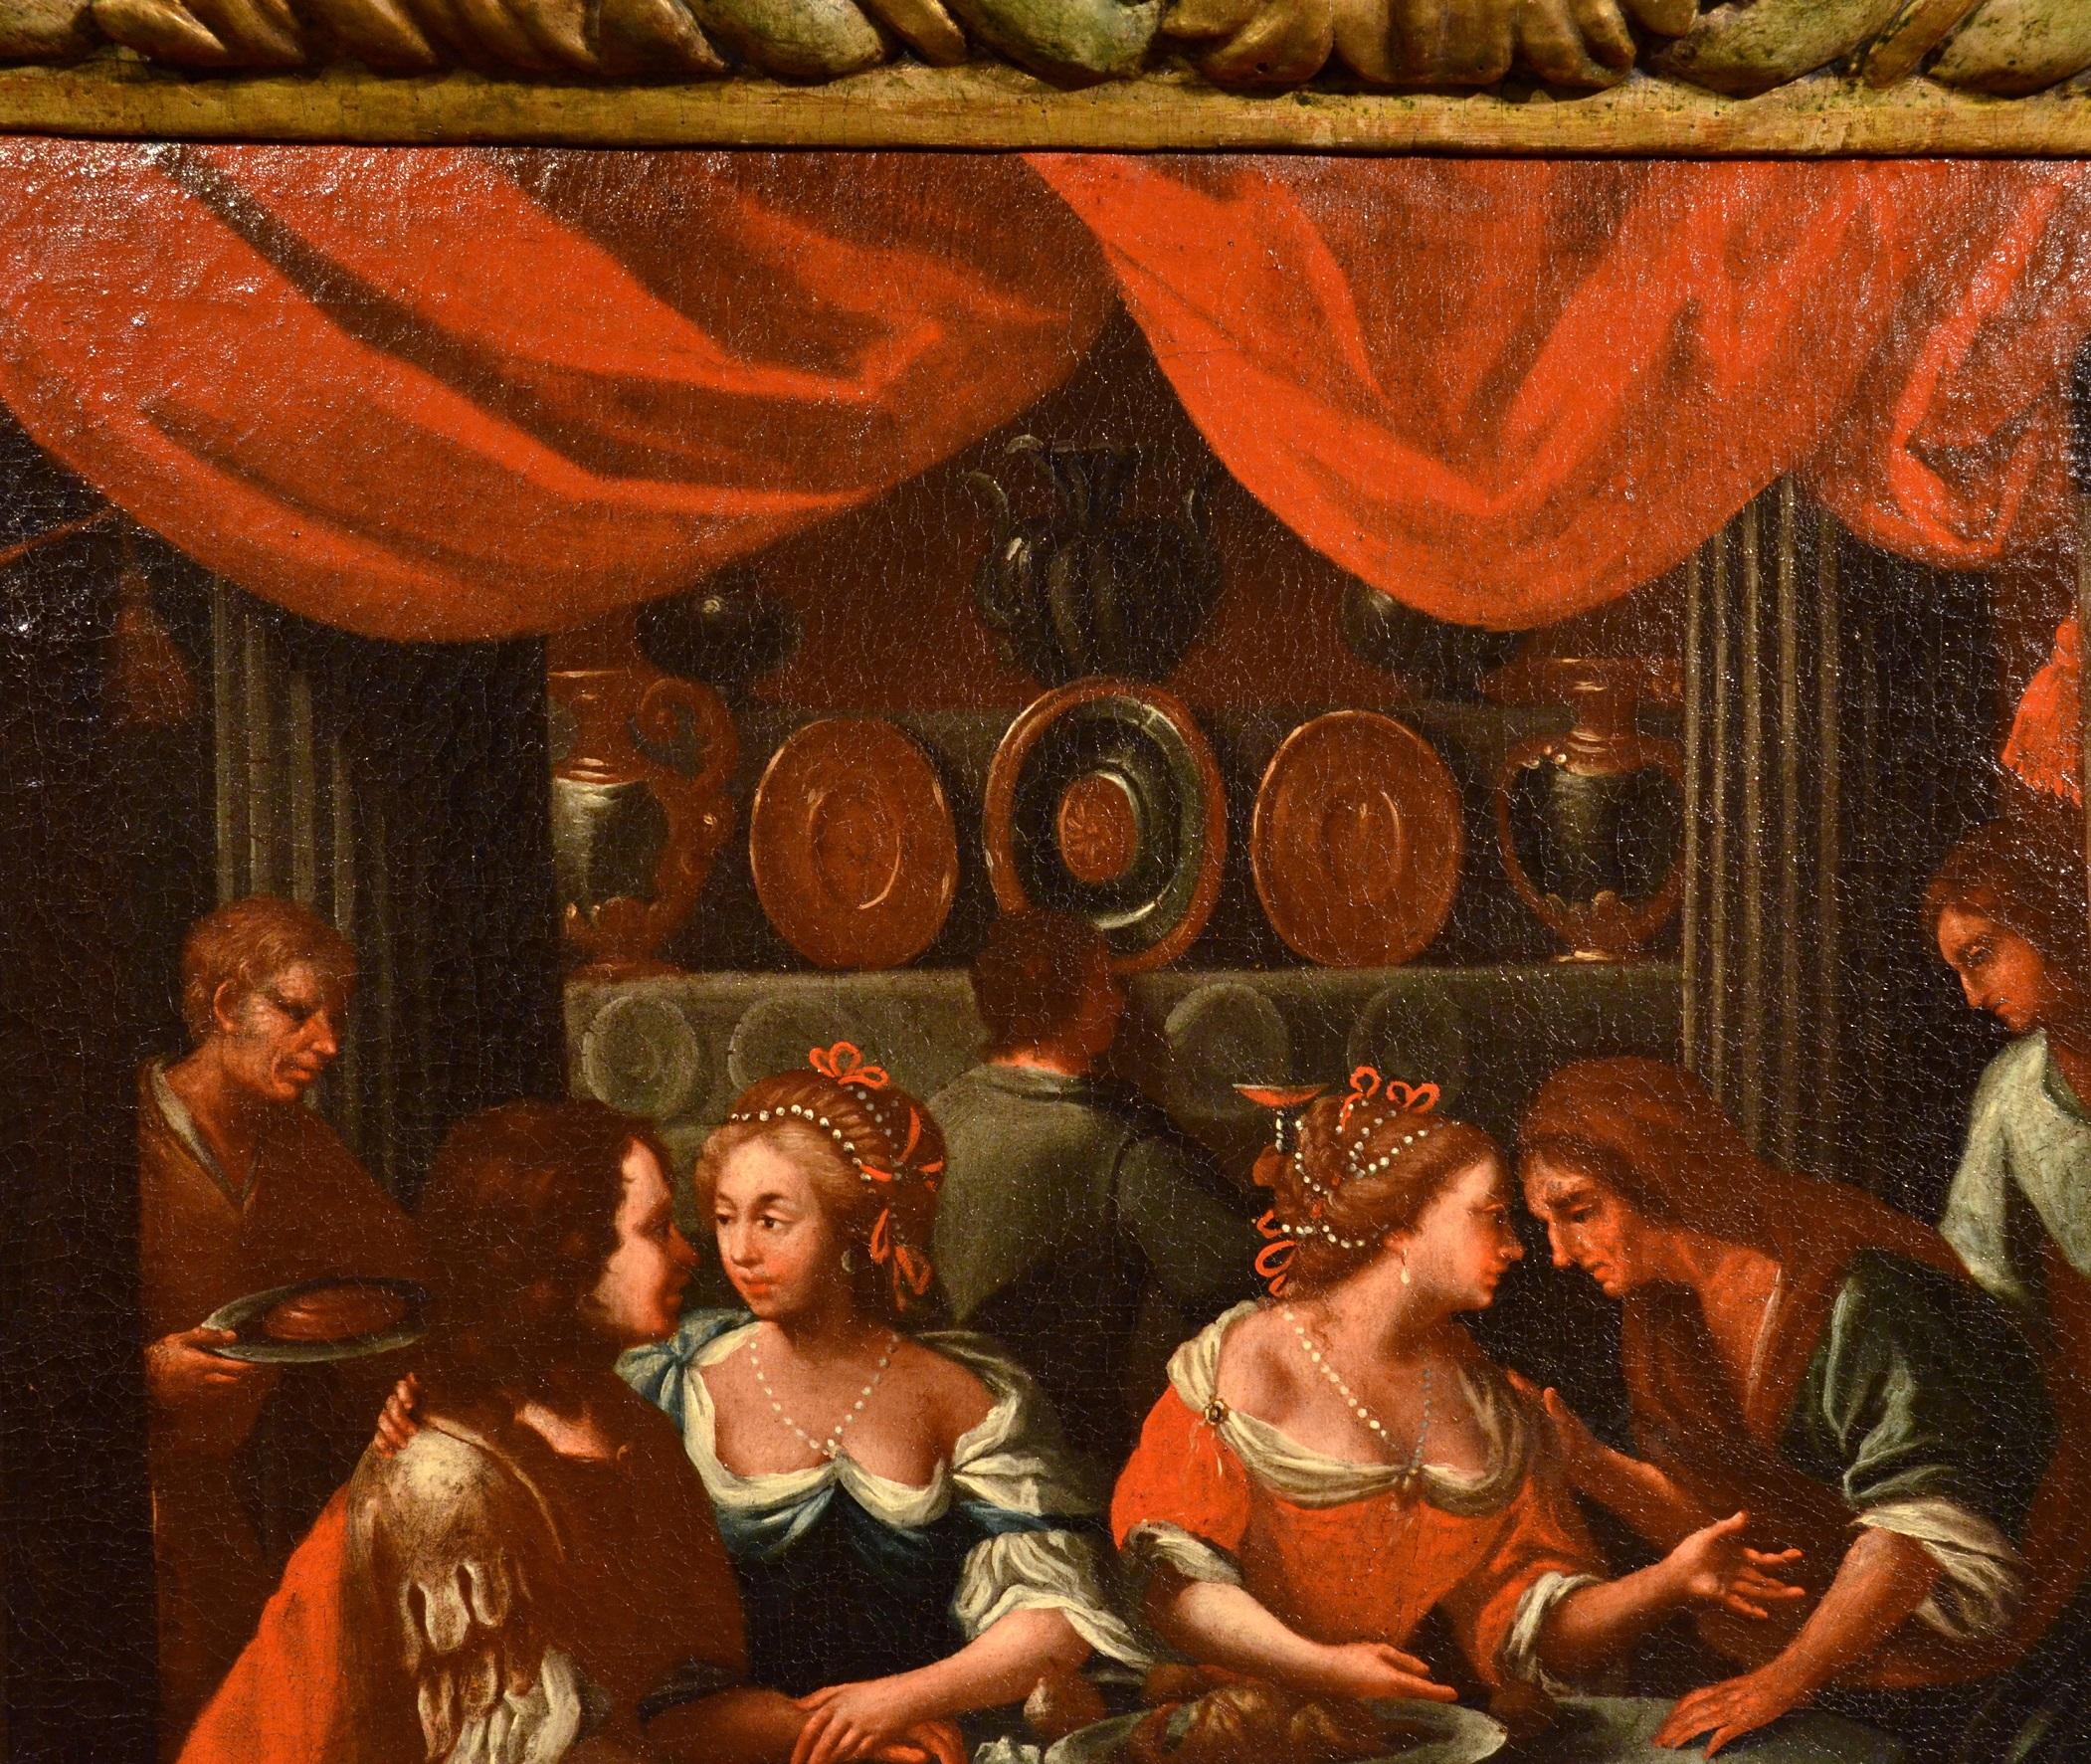 Banquet Flemish Italian Paint Oil on canvas Old master 17th Century Veronese Art en vente 3